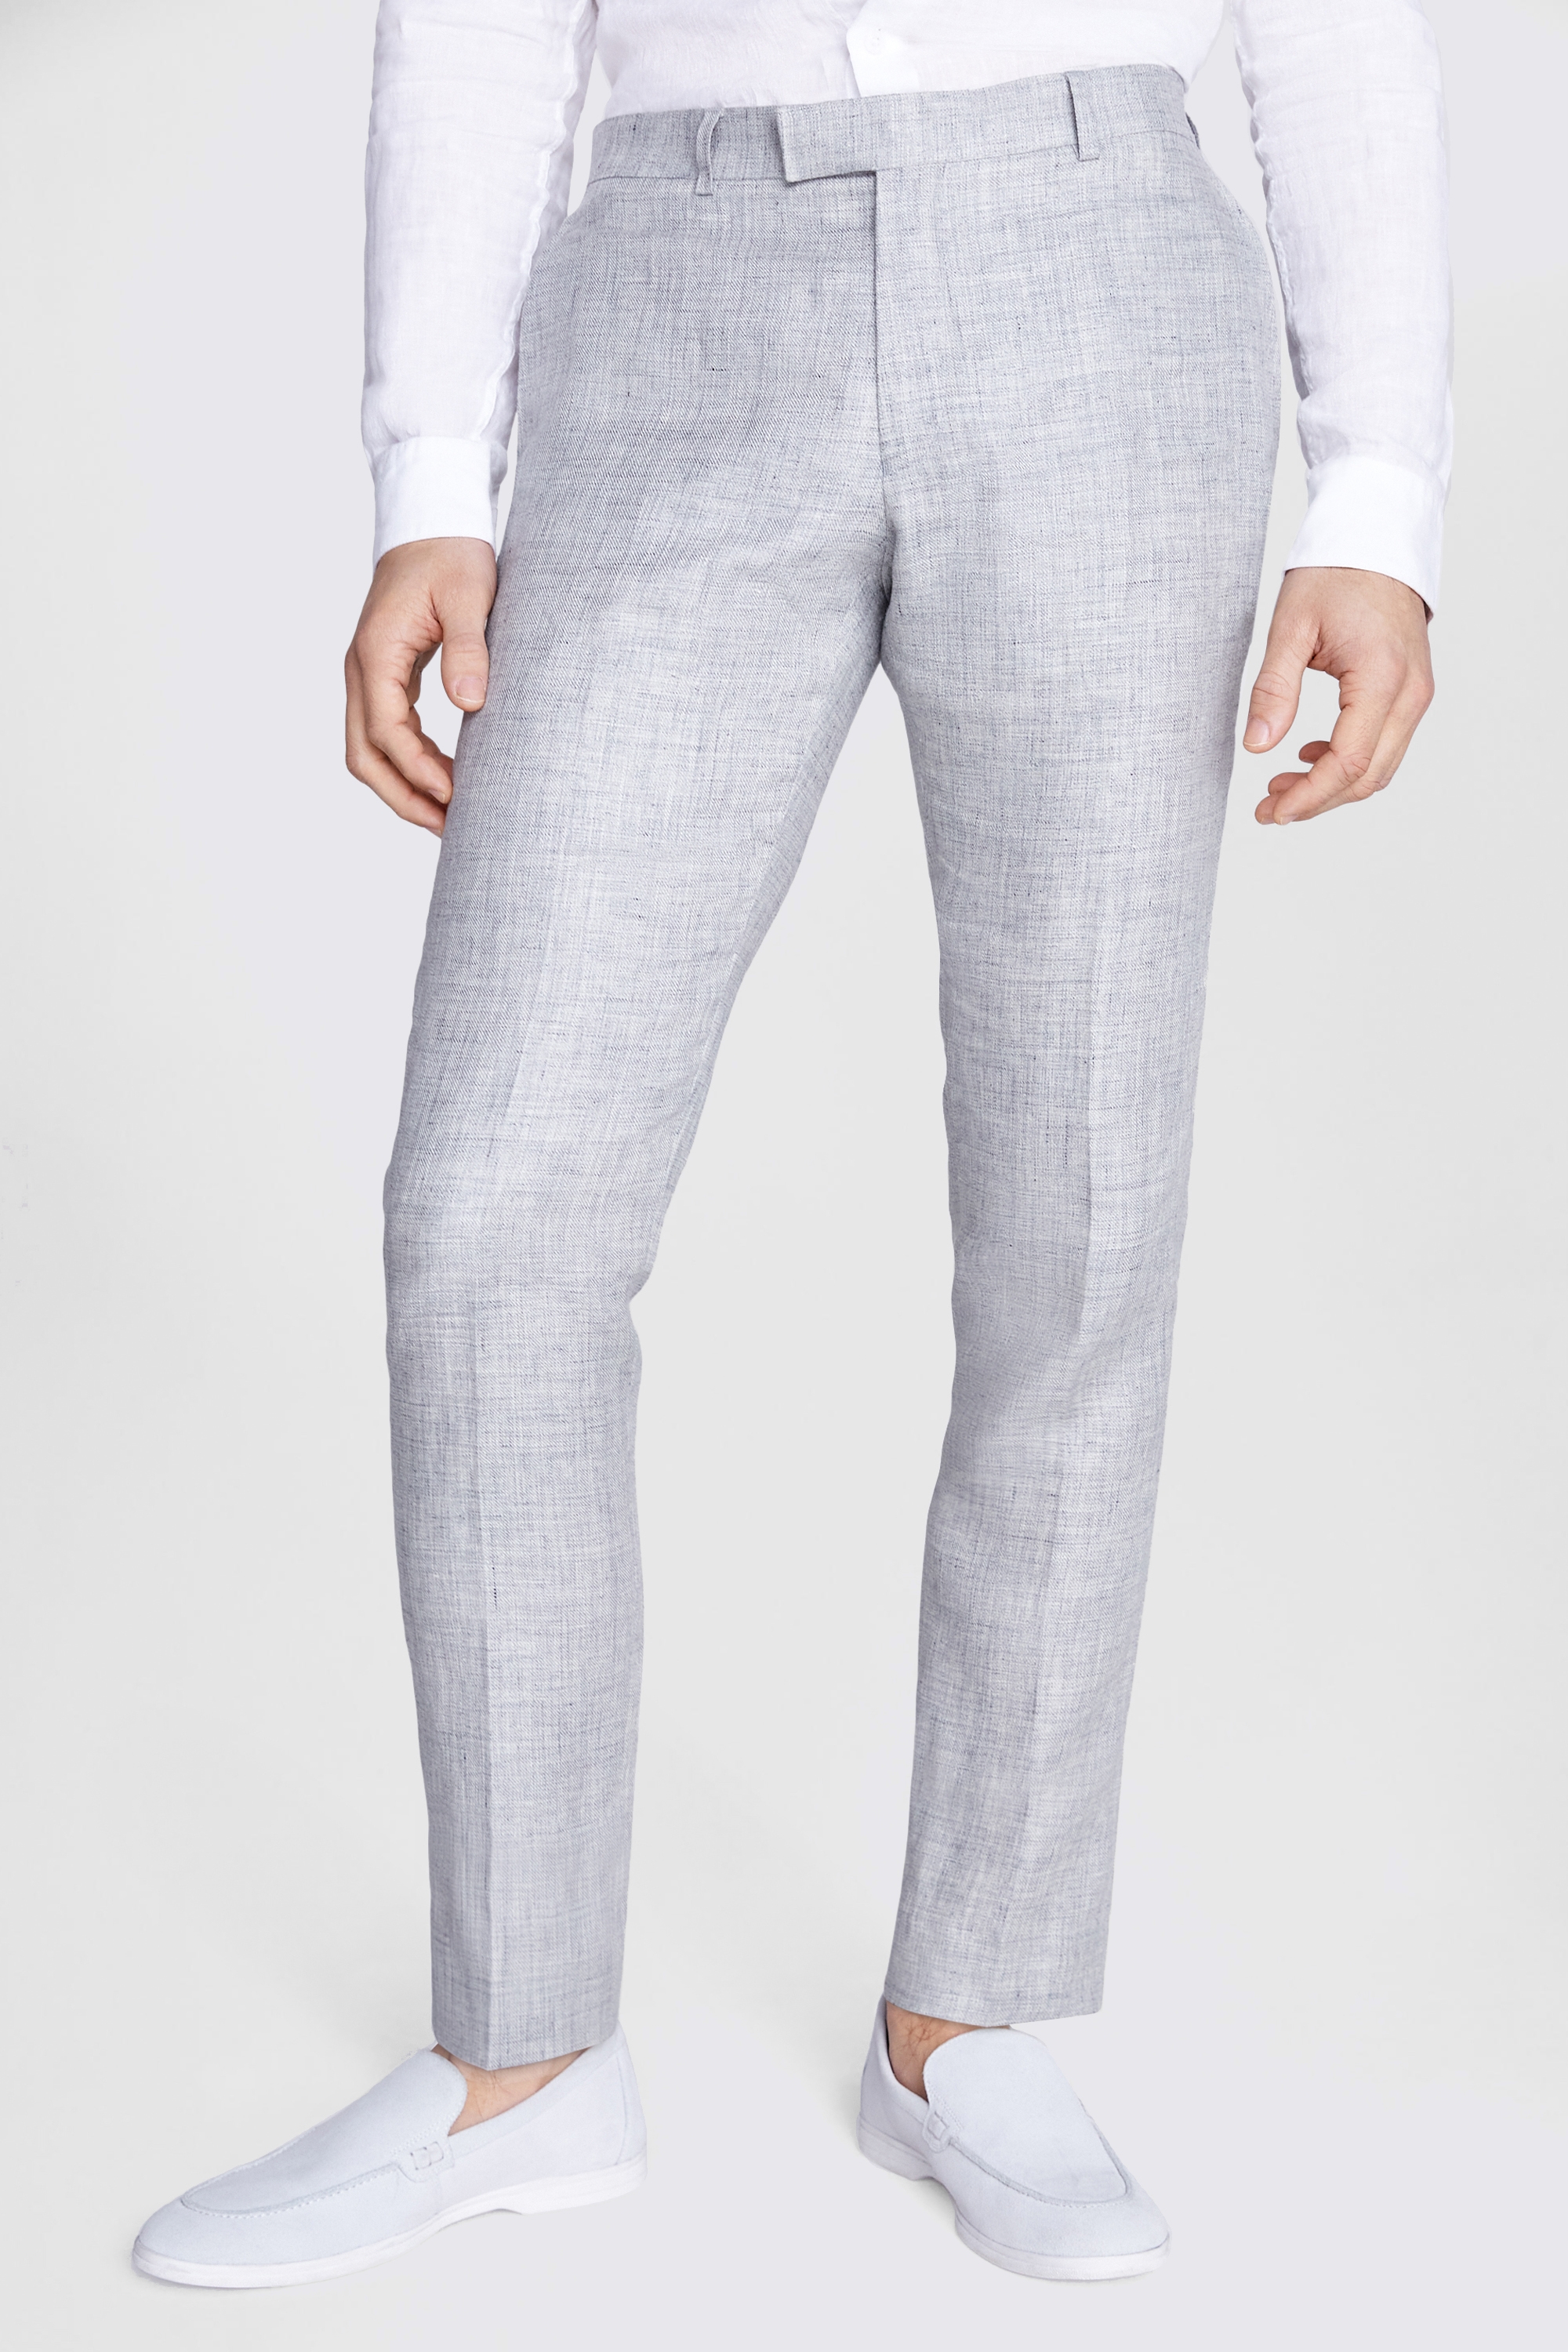 Grey Linen Trousers  Buy Grey Linen Trousers online in India